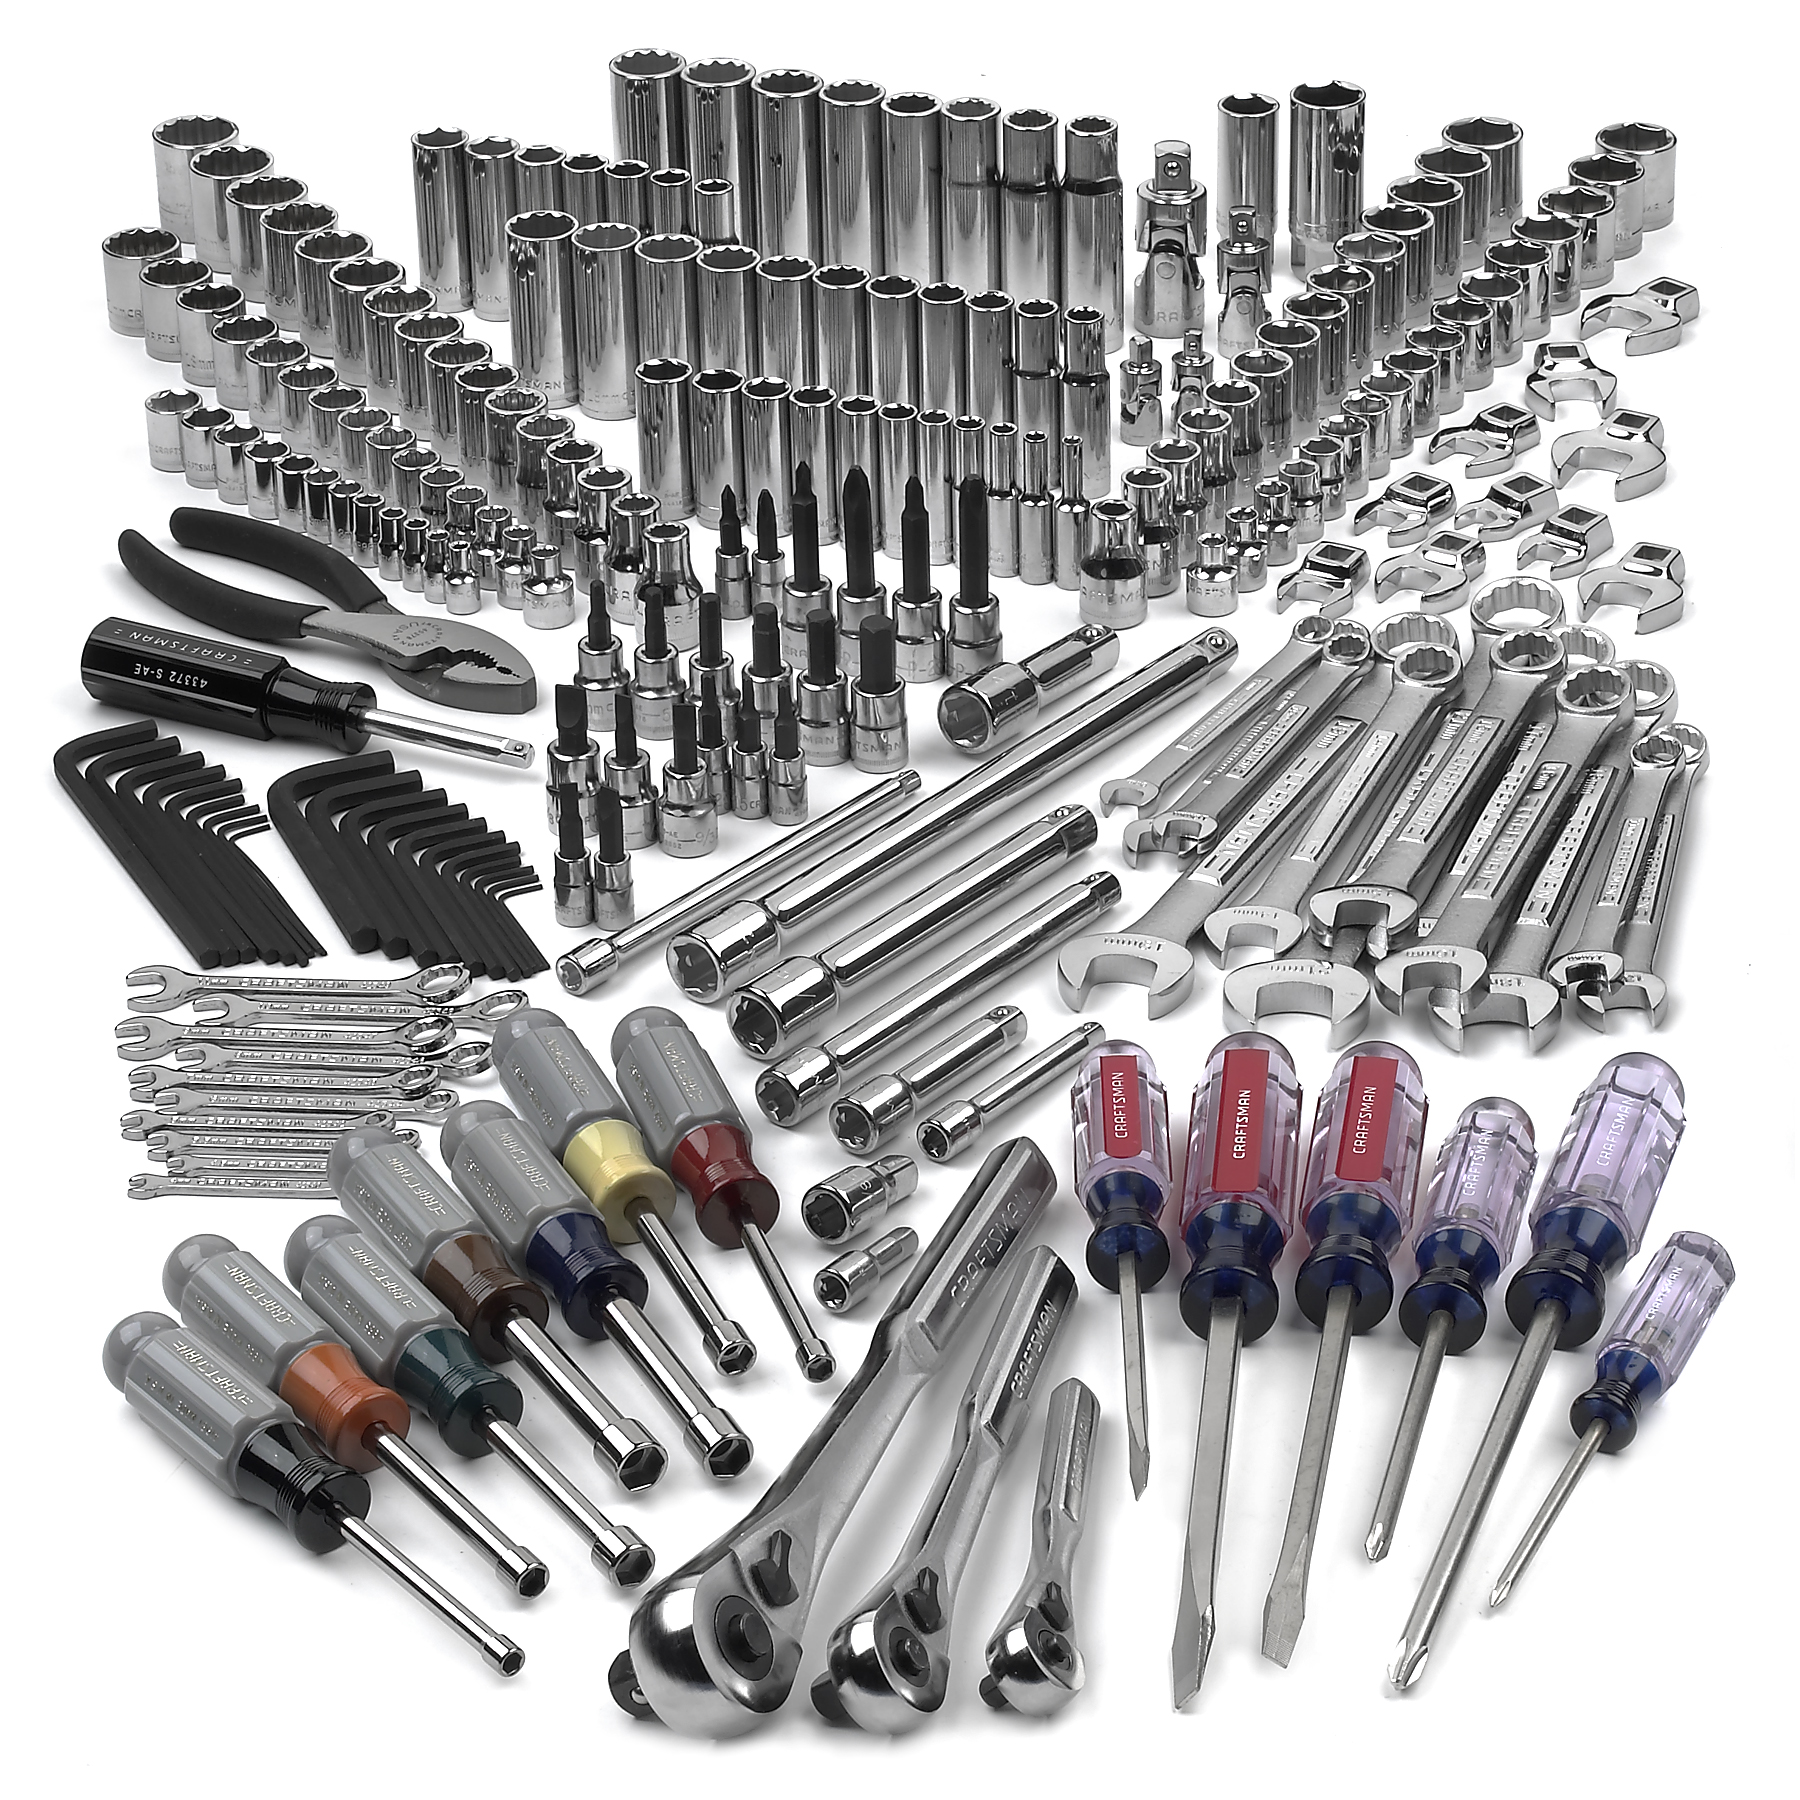 Craftsman 215 Piece ALL METRIC Mechanics Tool Set